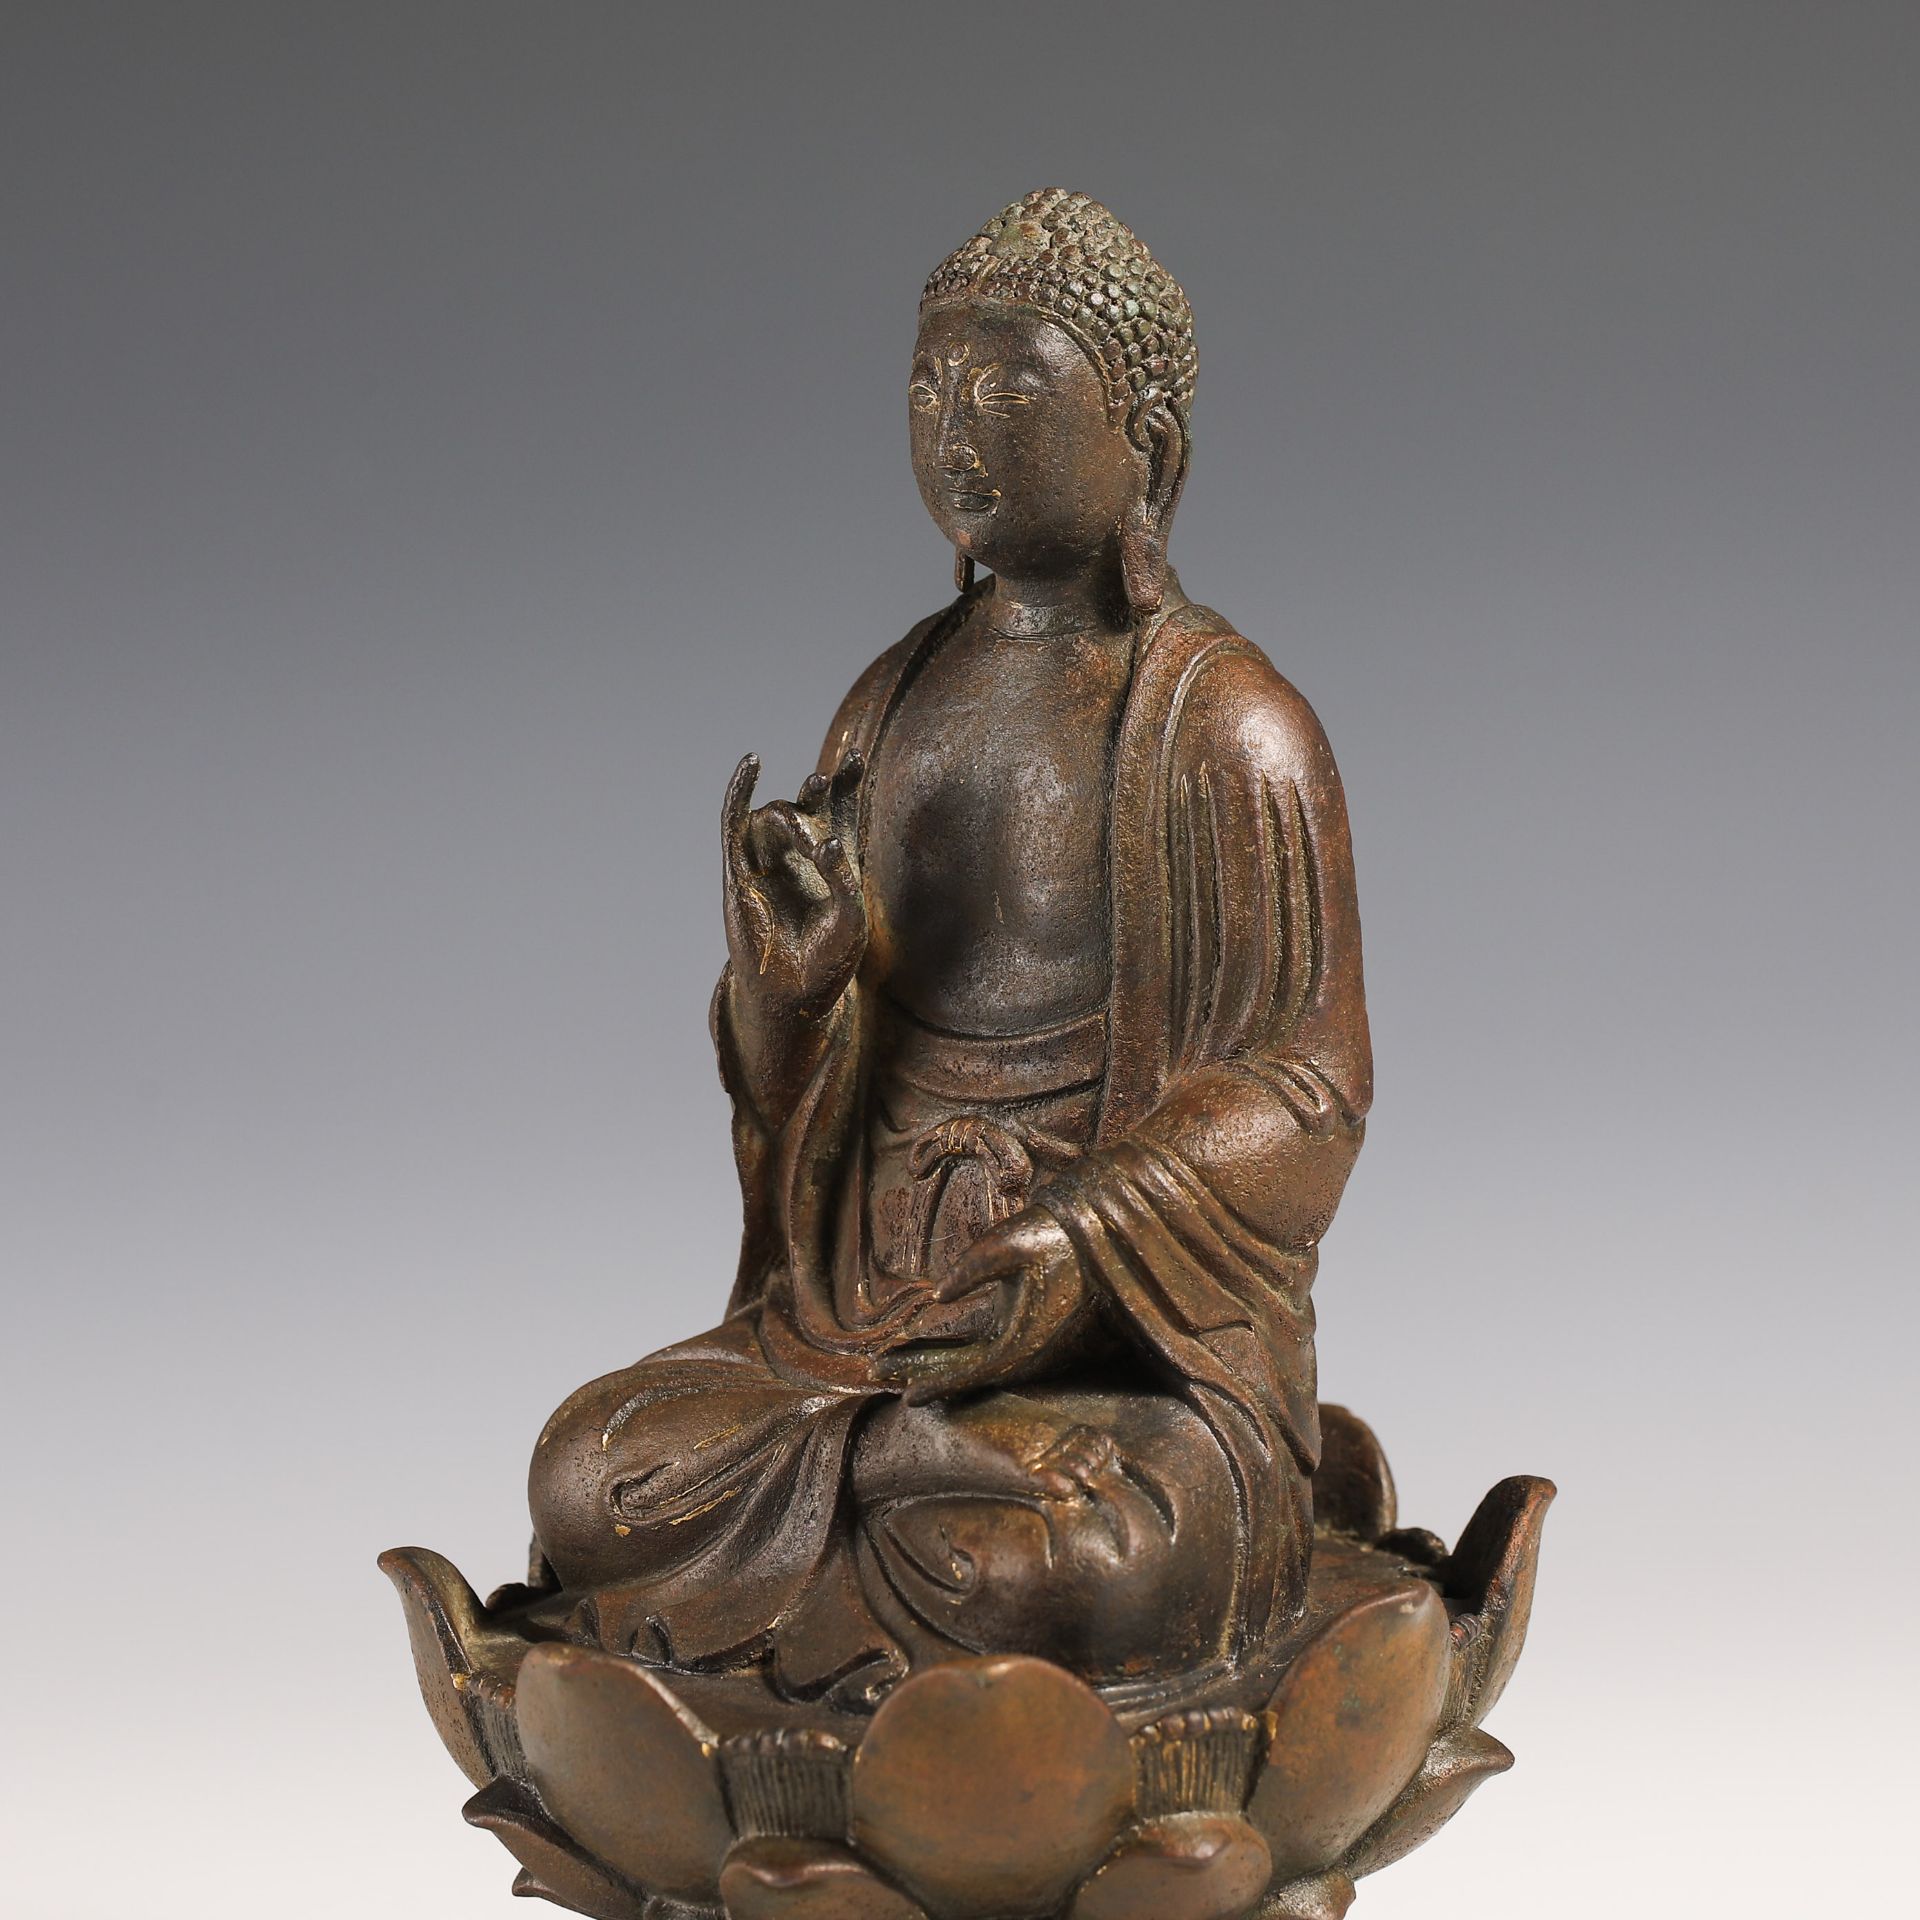 Liao Dynasty Buddha statue - Image 9 of 17